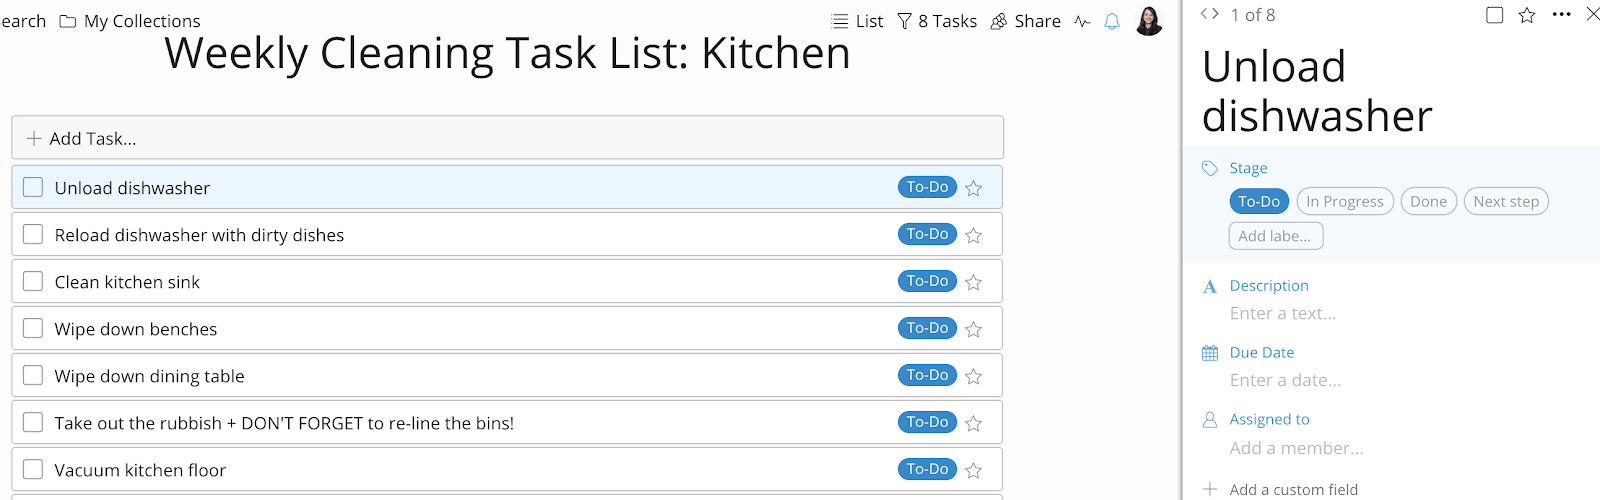 Zenkit task list template custom fields